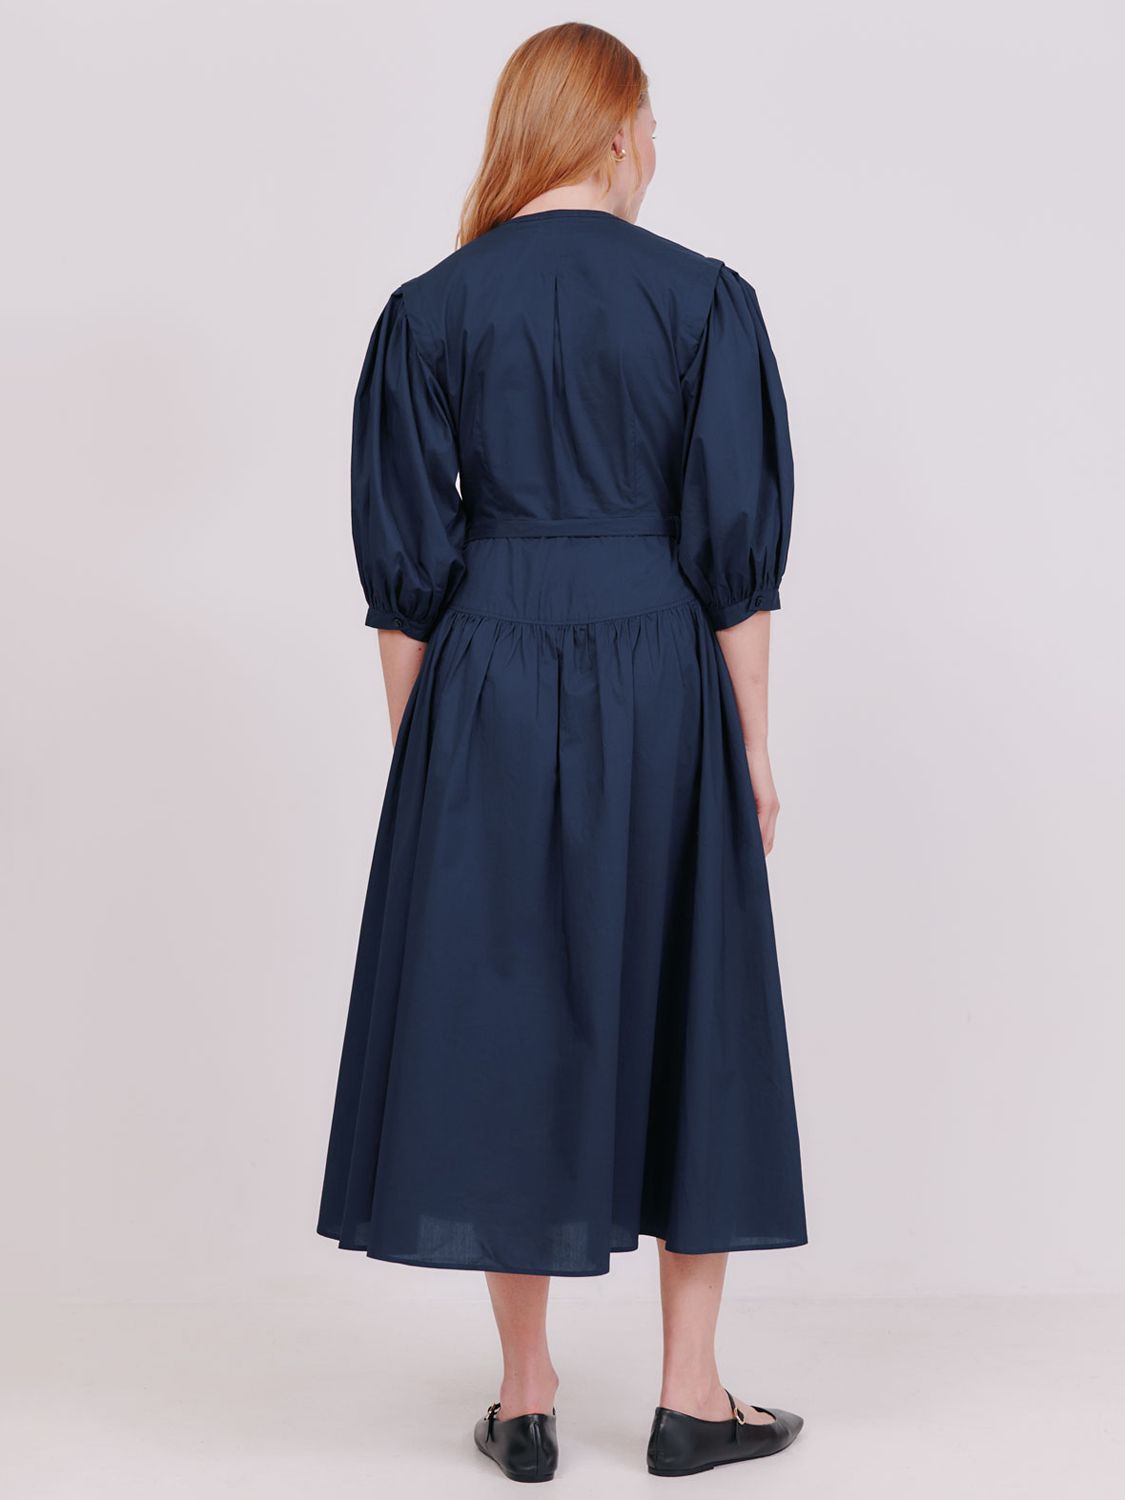 Vivere By Savannah Miller Florence Puff Sleeve Cotton Midi Dress, Navy, 8